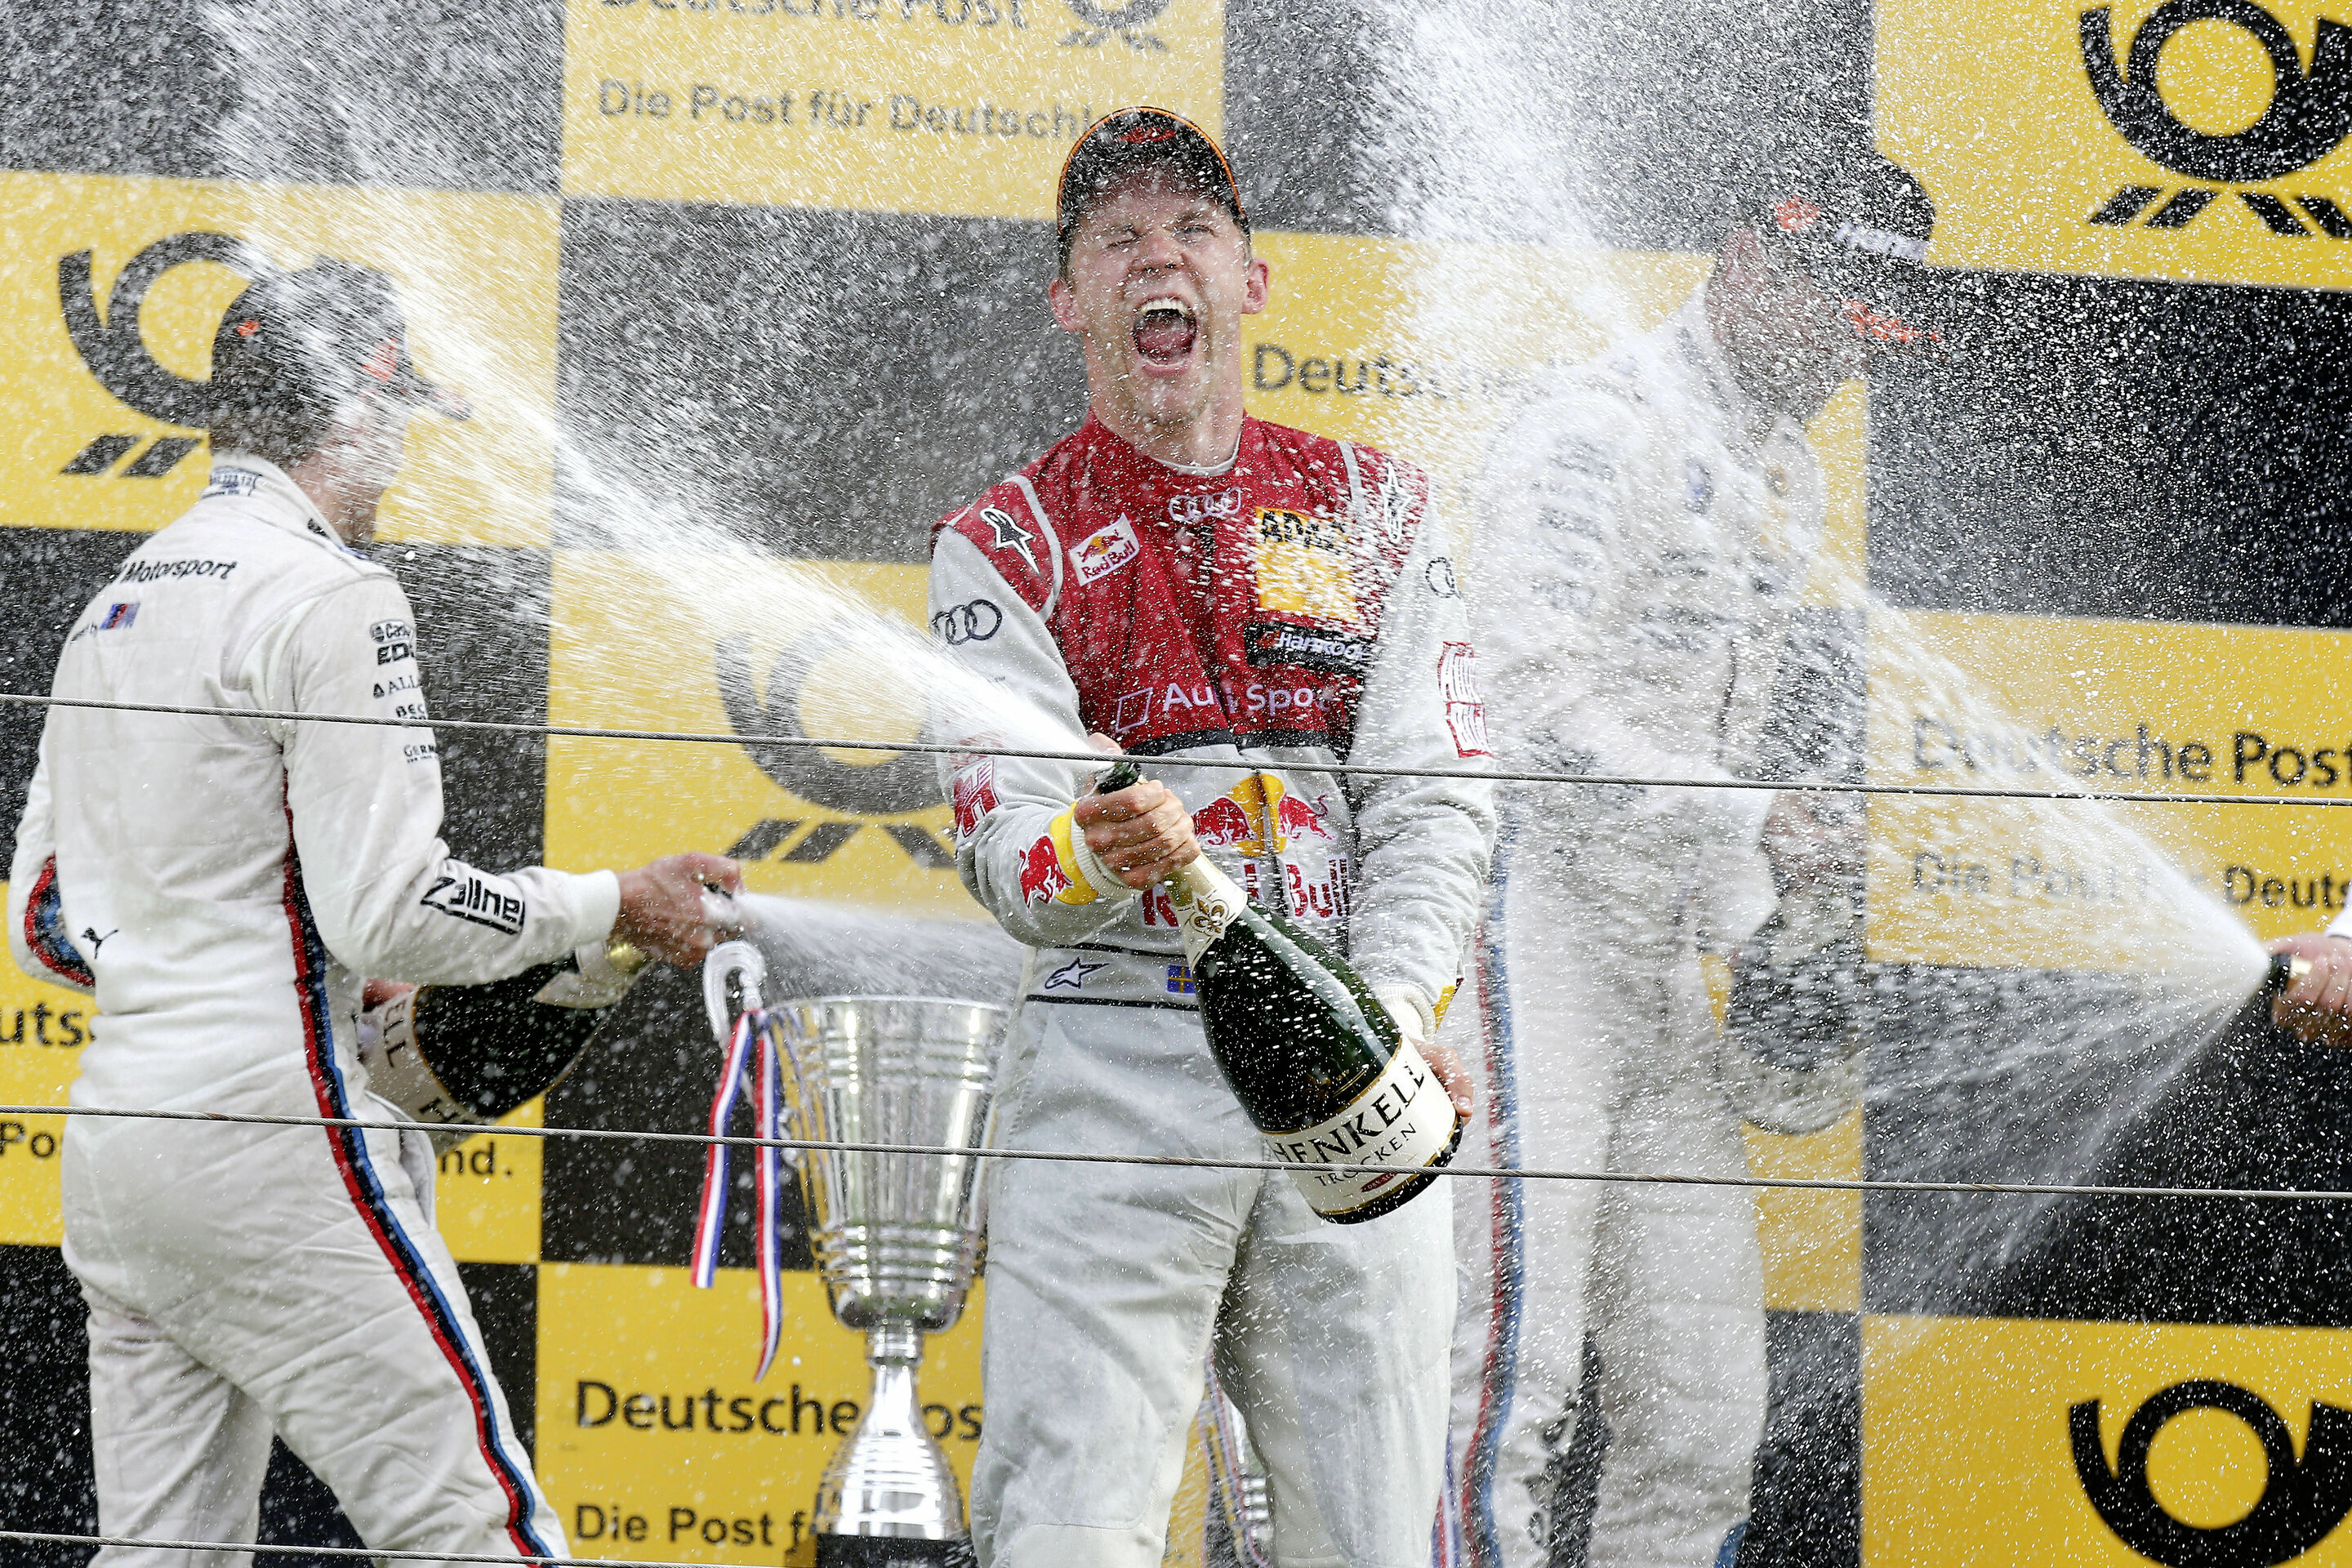 Audi wins DTM thriller at Zandvoort